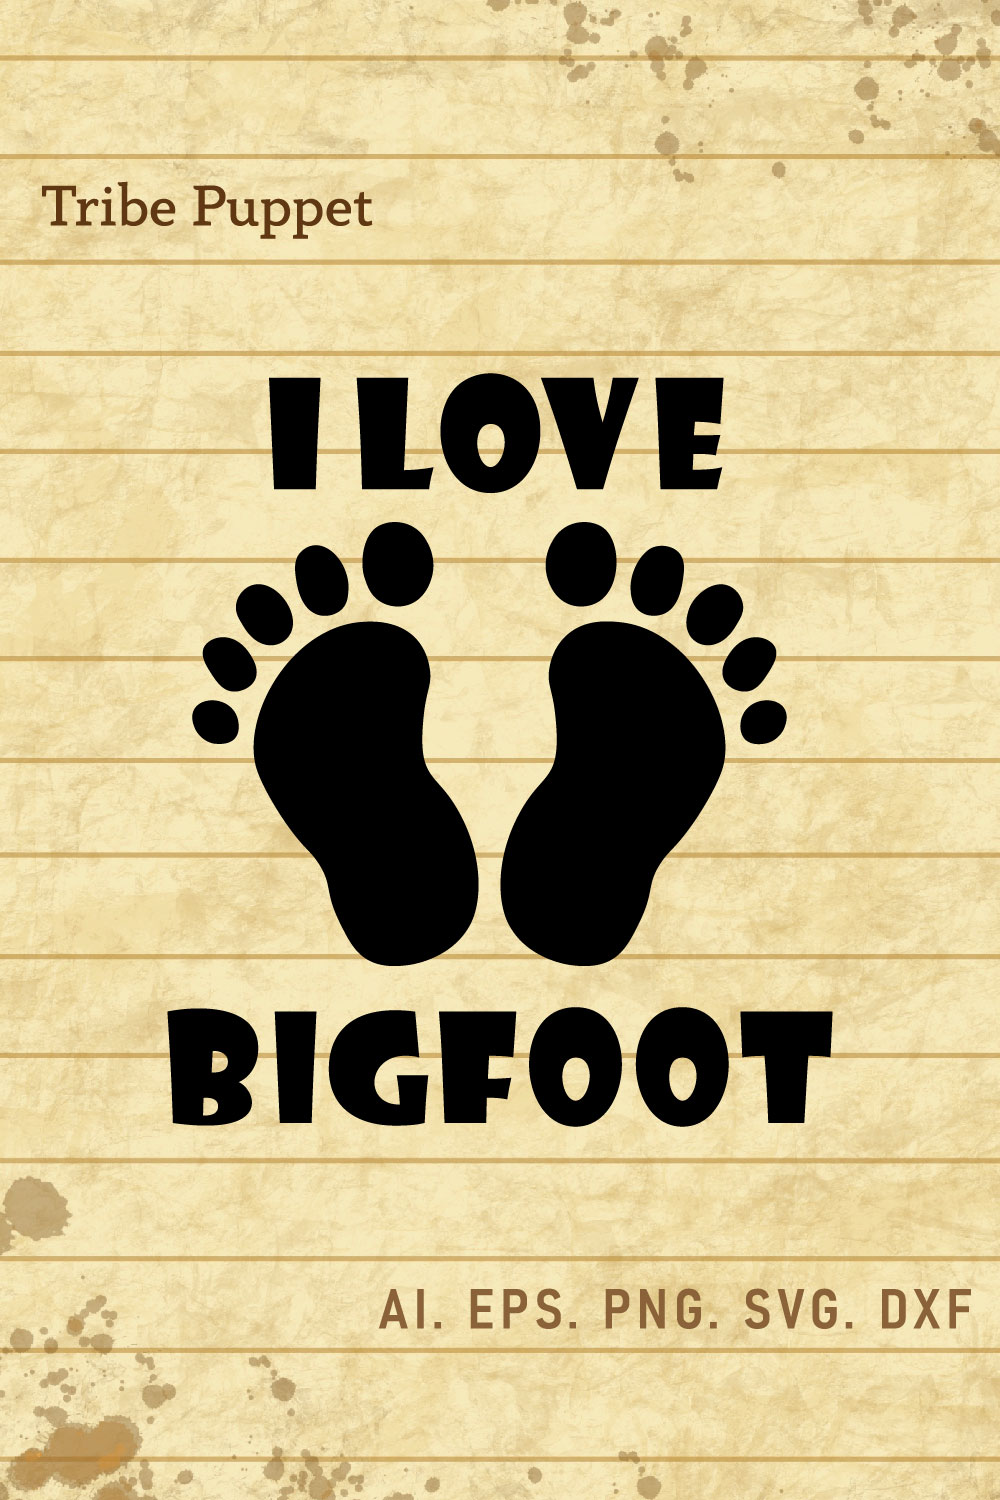 Bigfoot pinterest preview image.